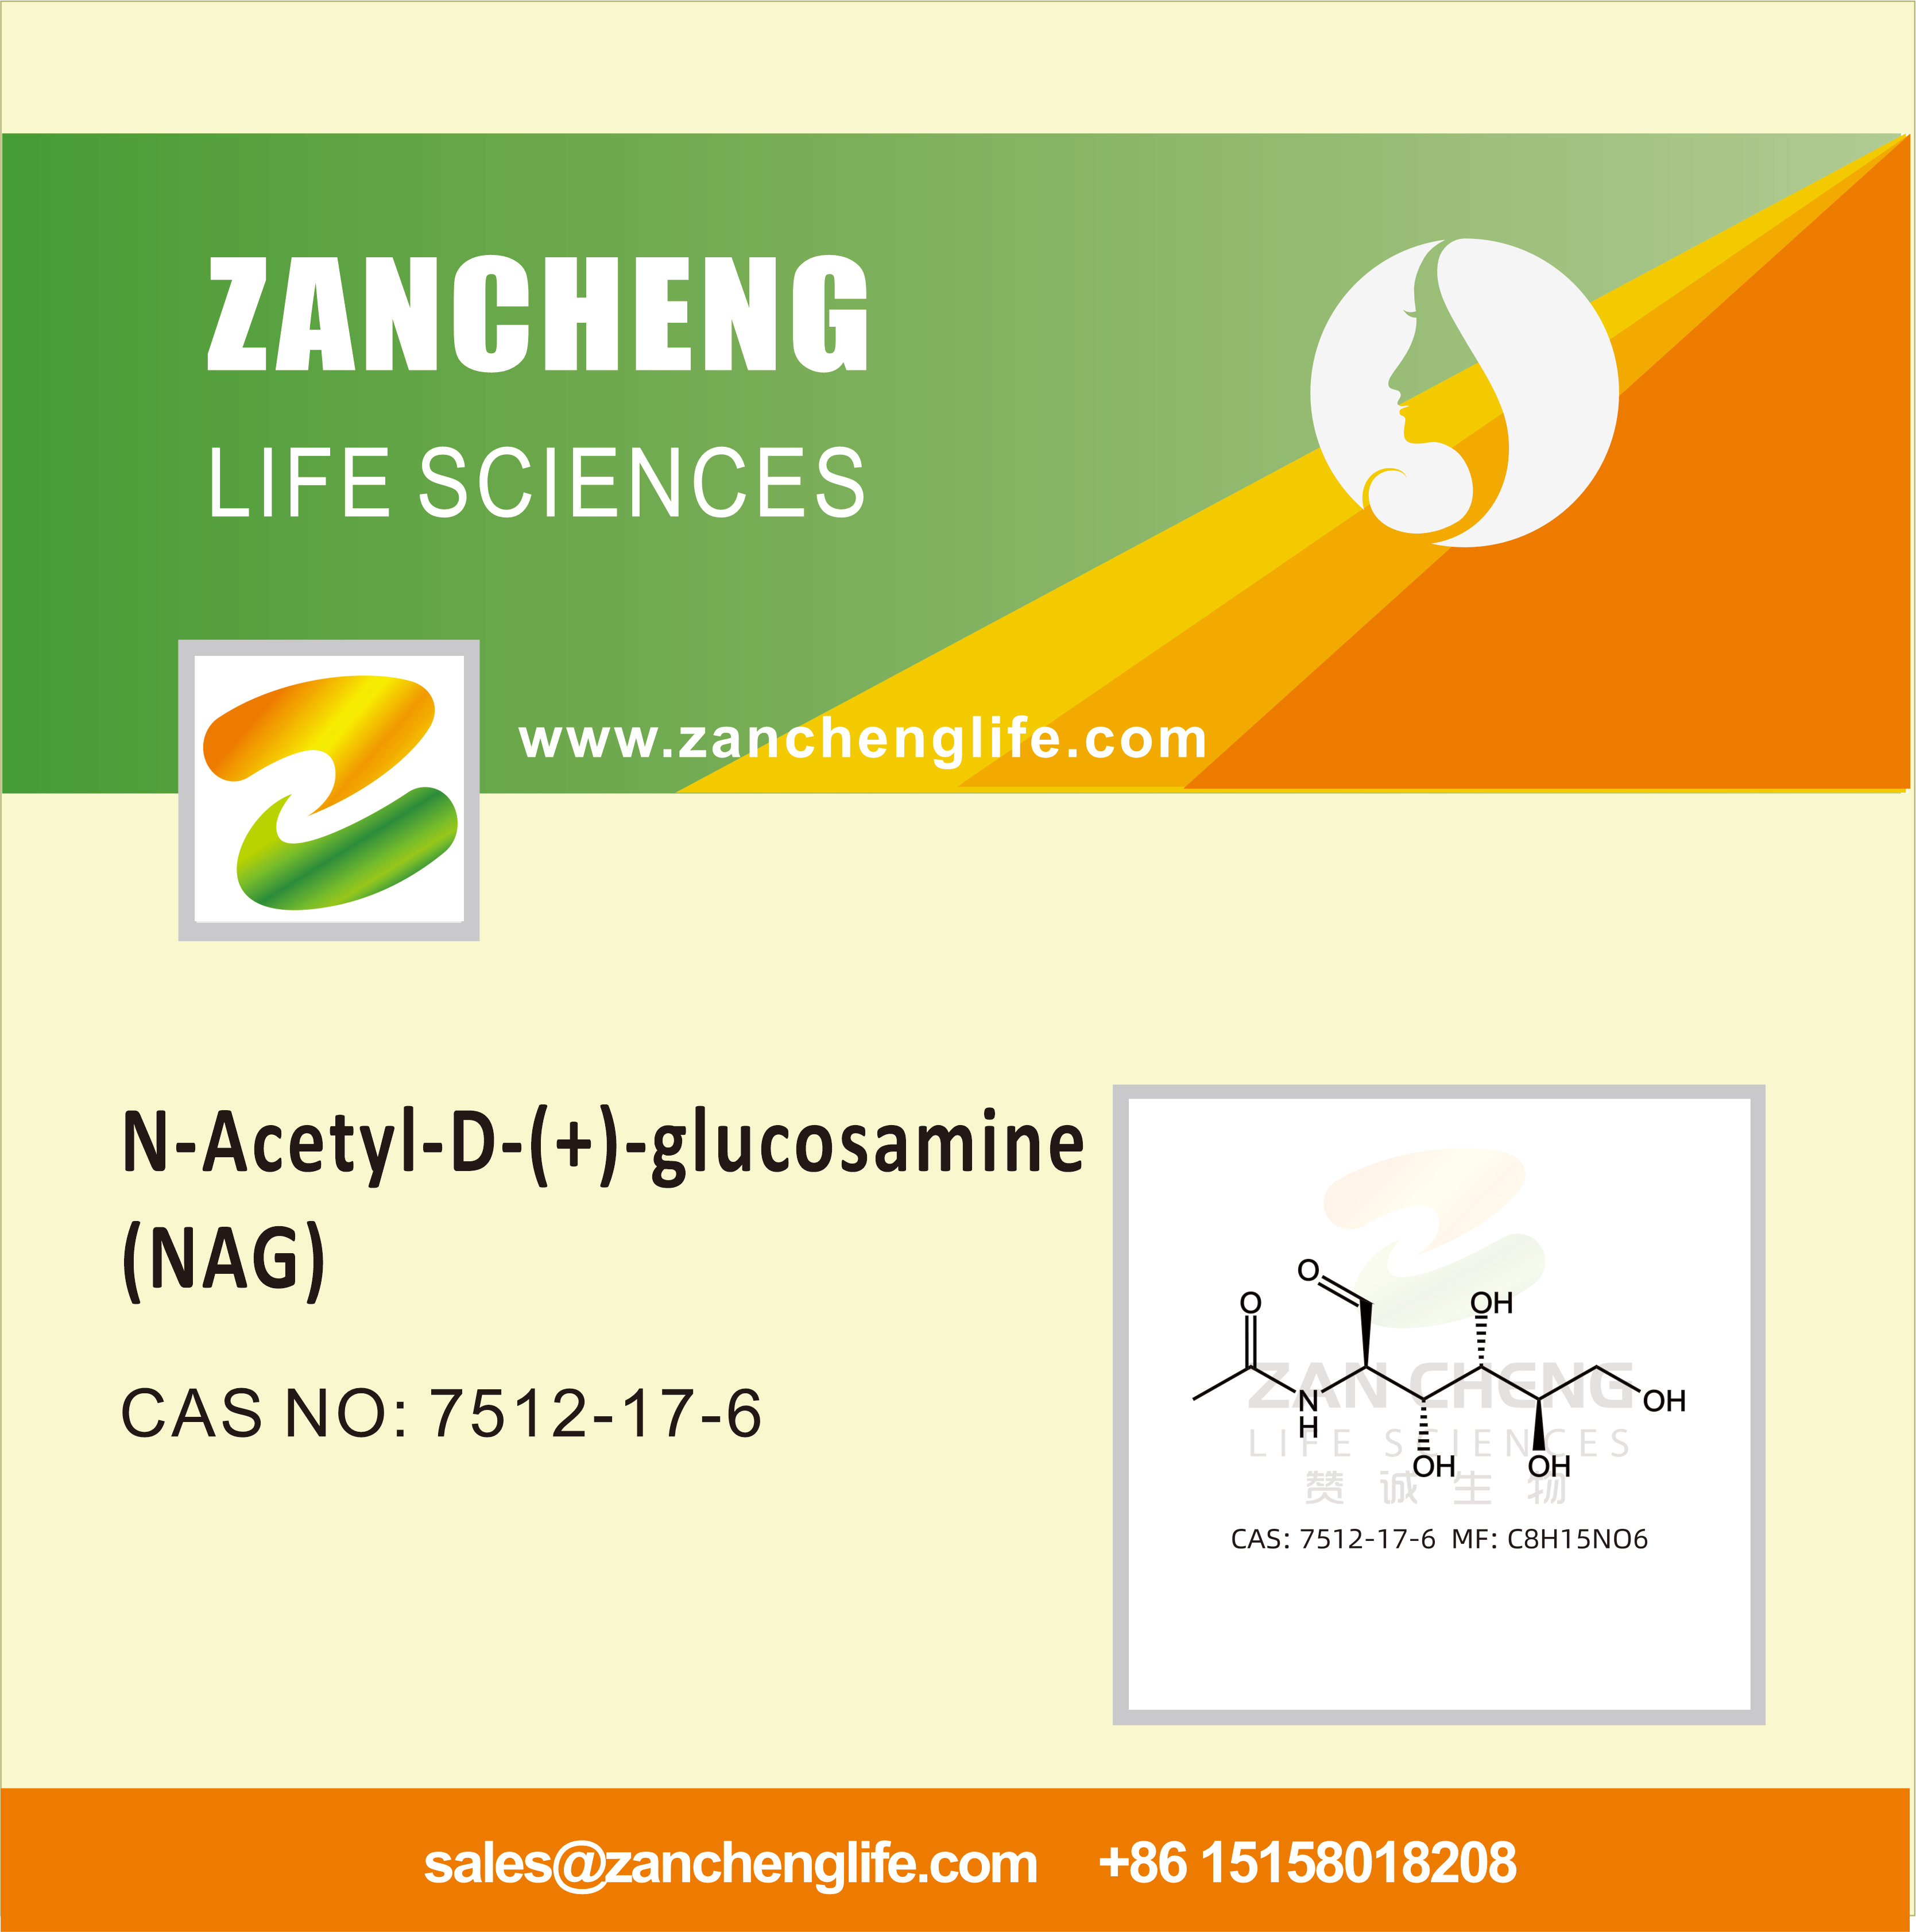 N-Acetyl-D-(+)-glucosamine (NAG)